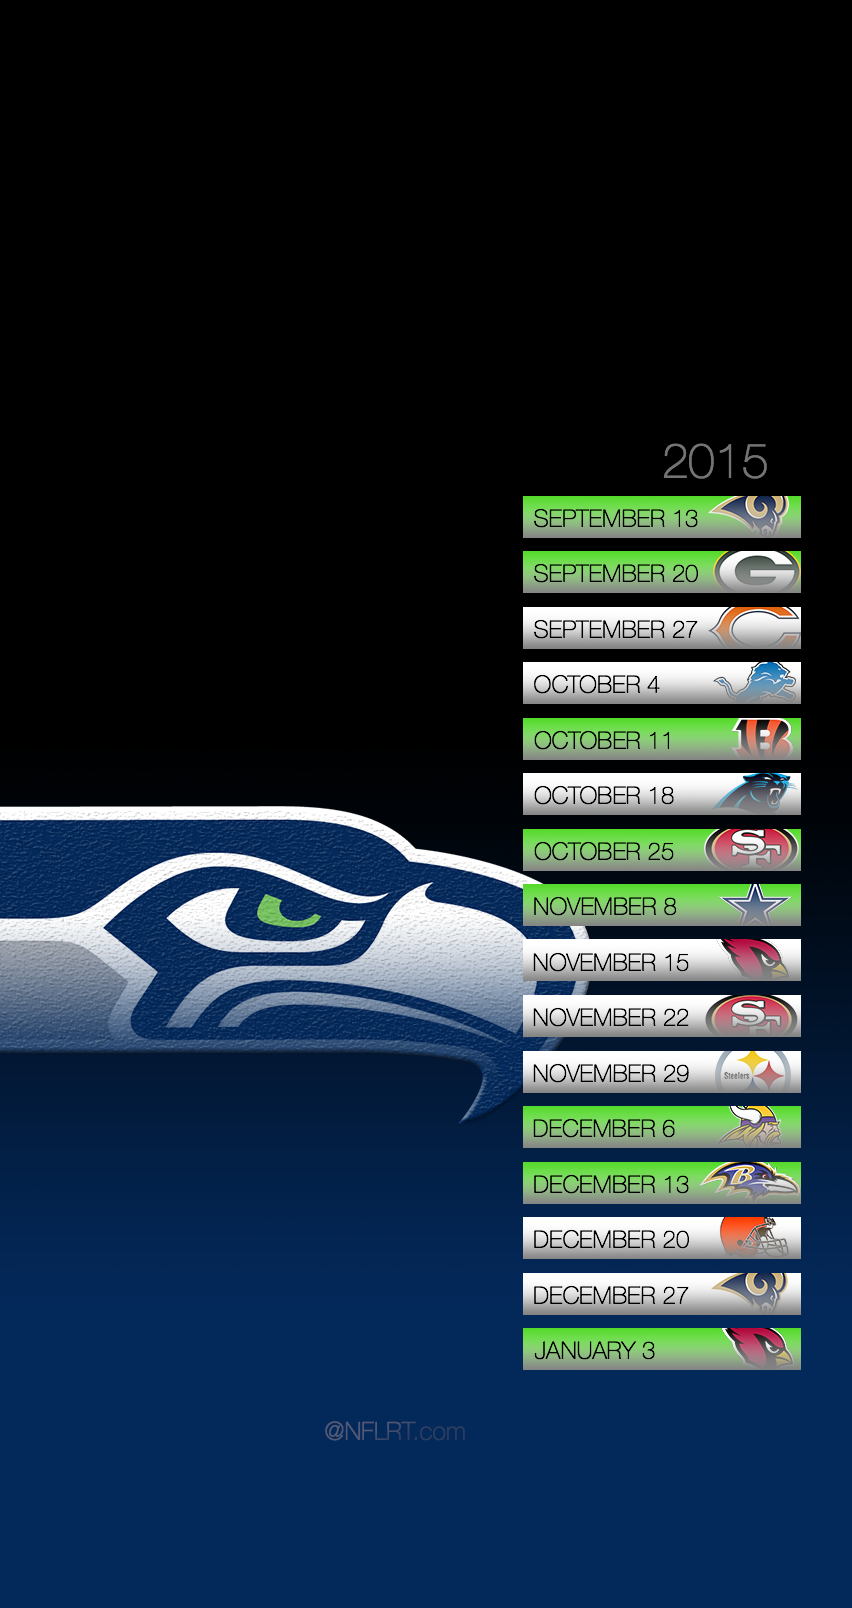 Seahawks Schedule By Nflrt Nfl